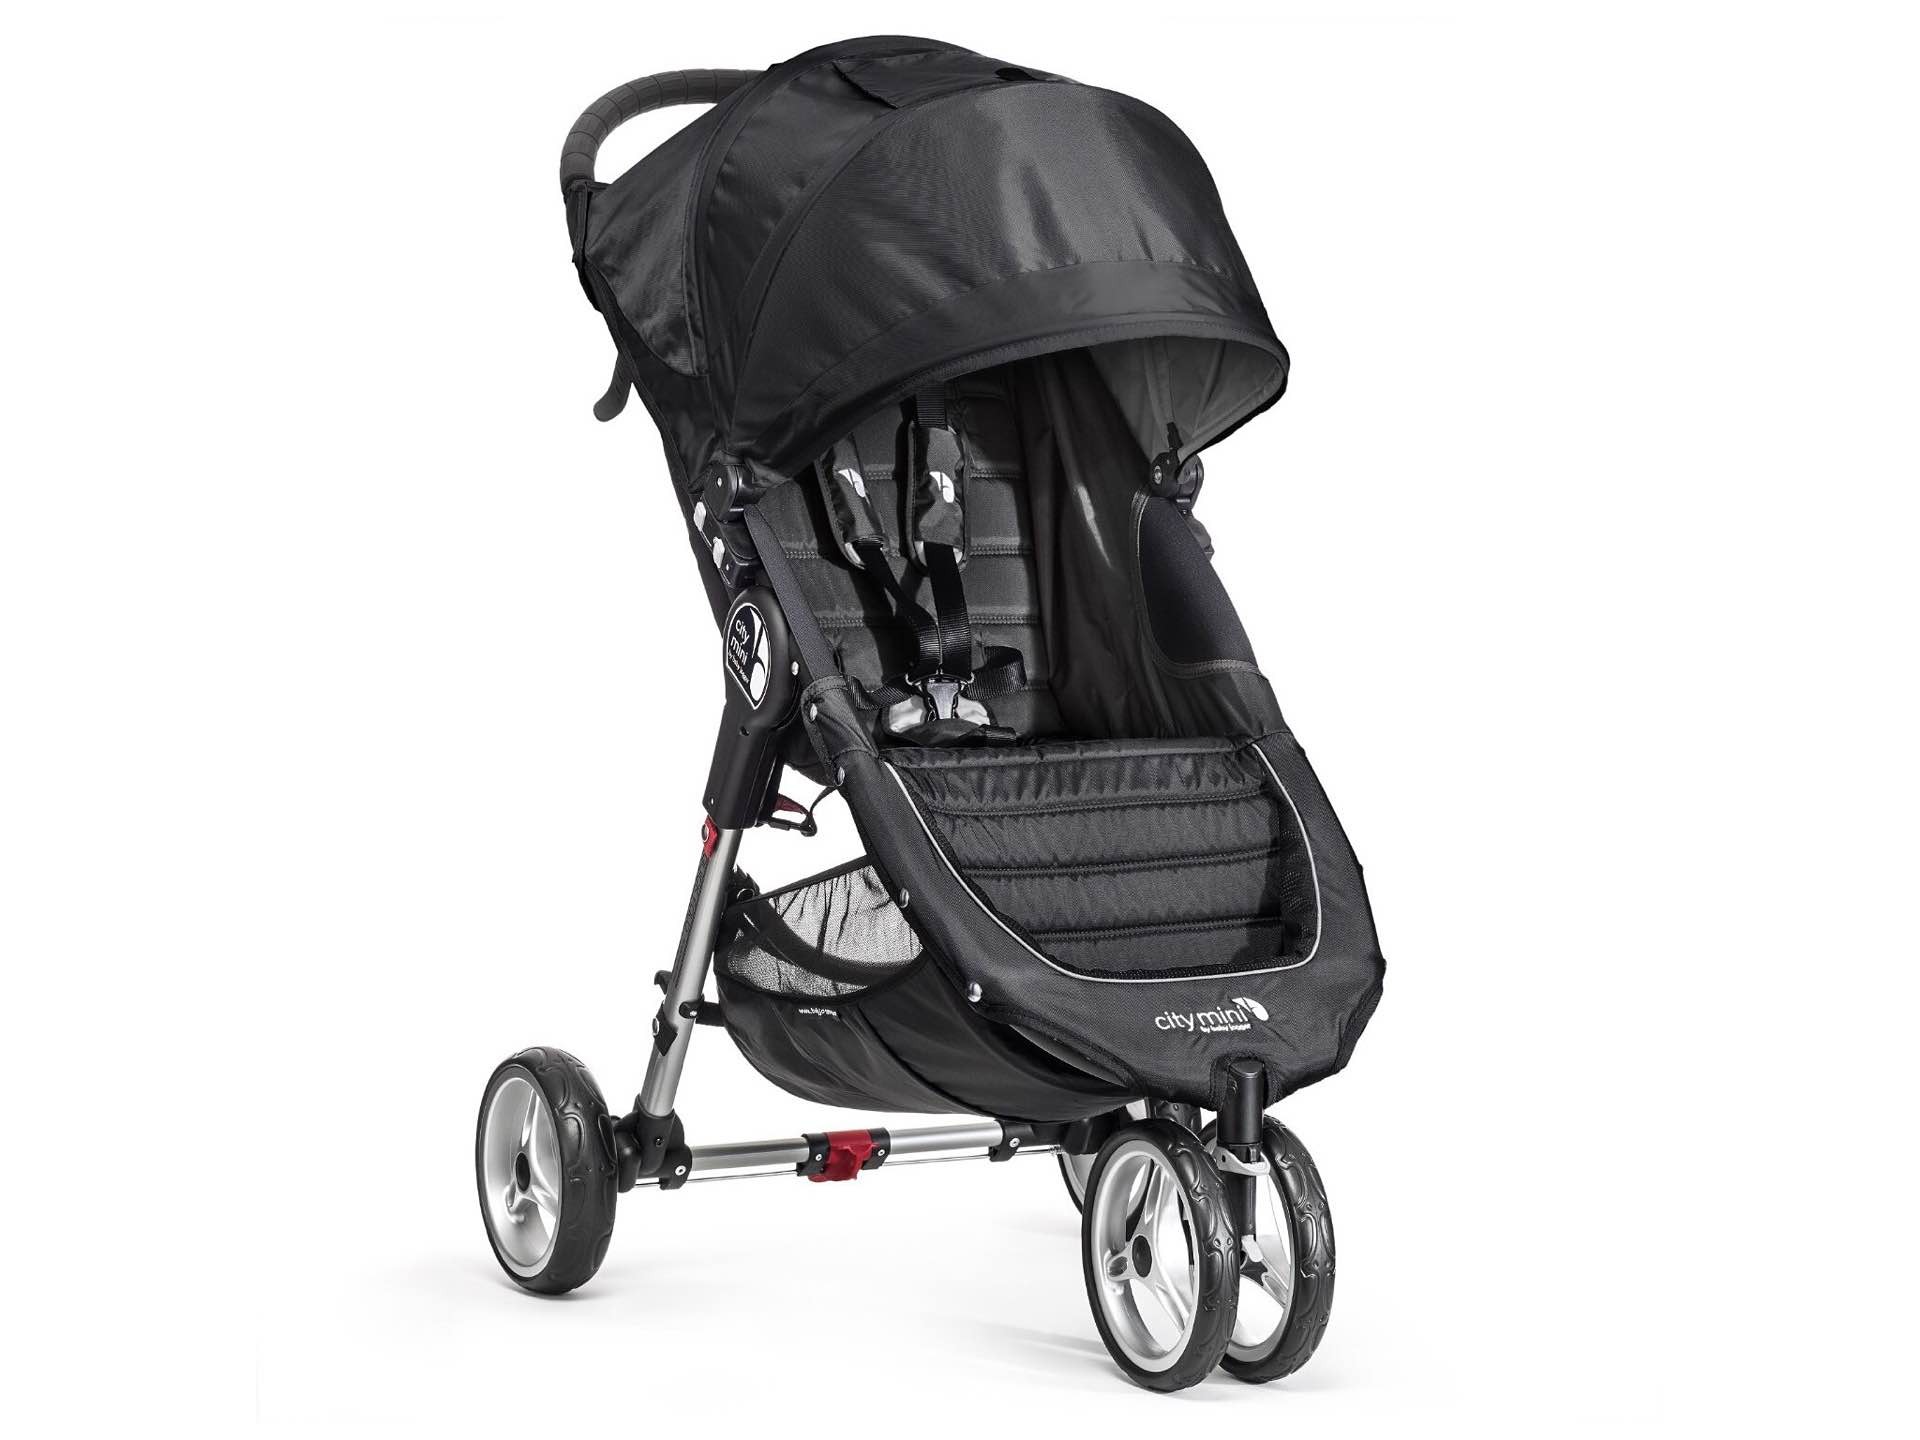 Baby Jogger's City Mini stroller. ($249)